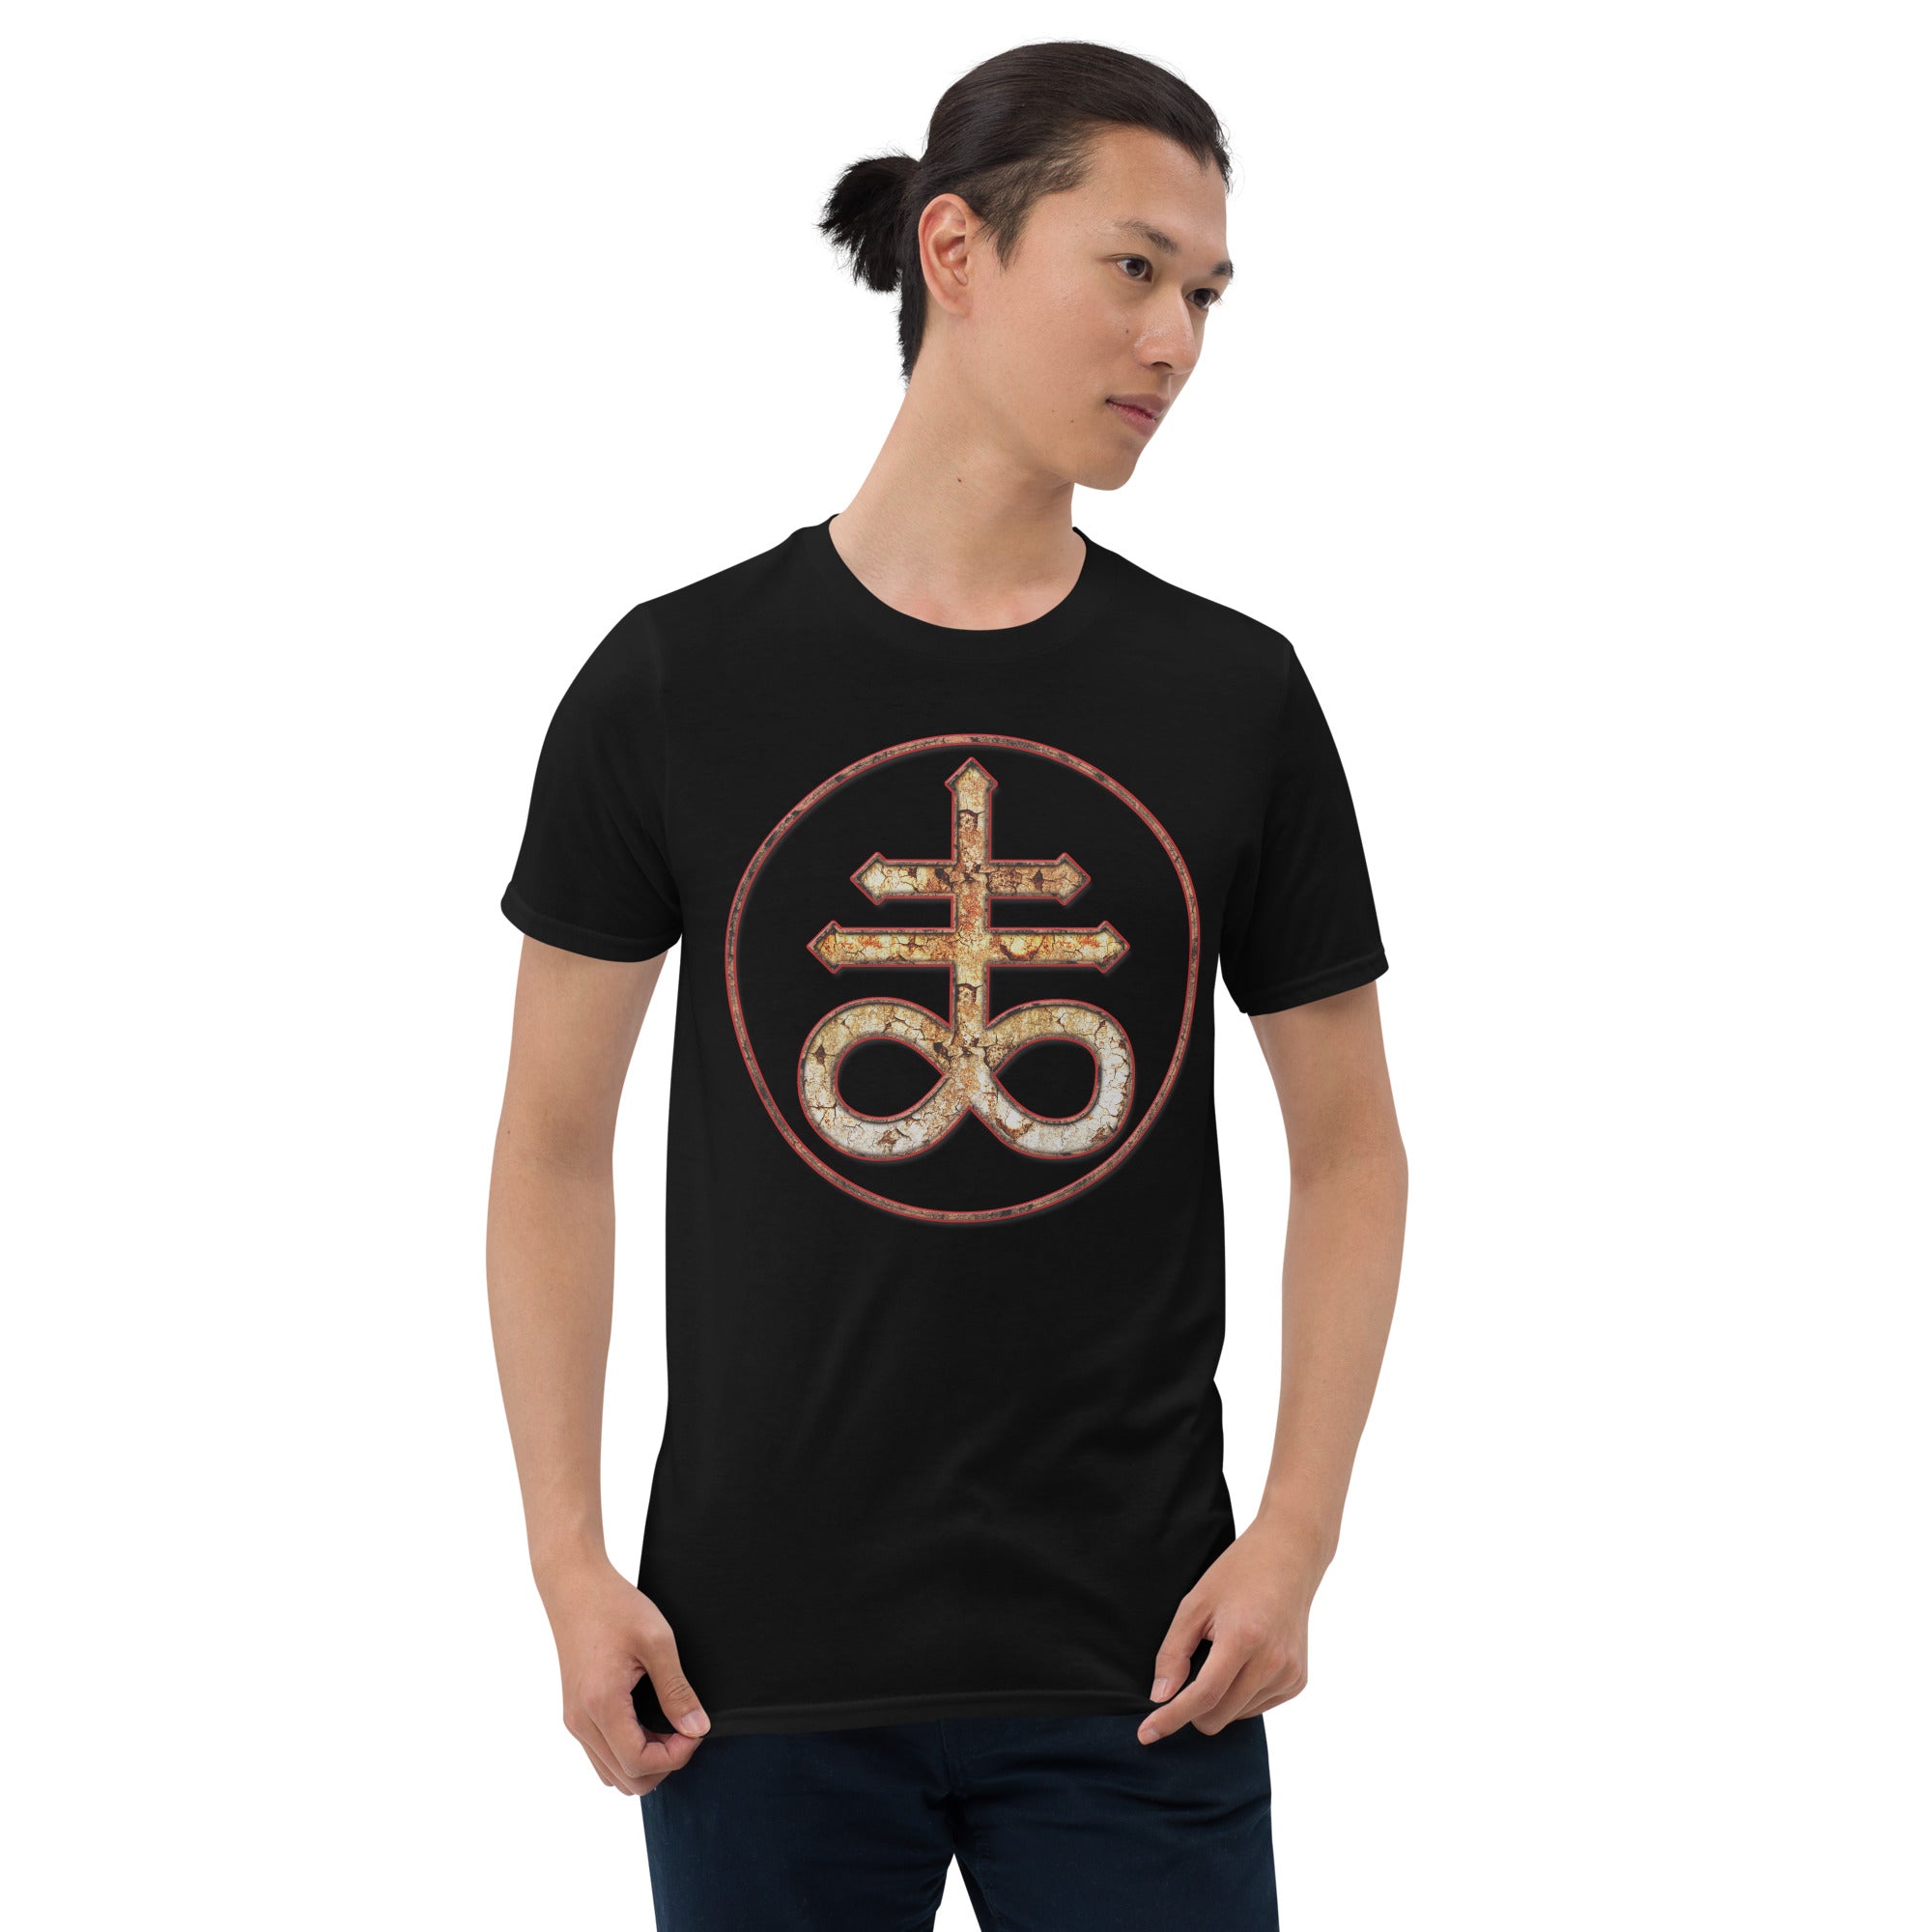 Withered Evil Satan's Cross Leviathan Symbol Short-Sleeve T-Shirt